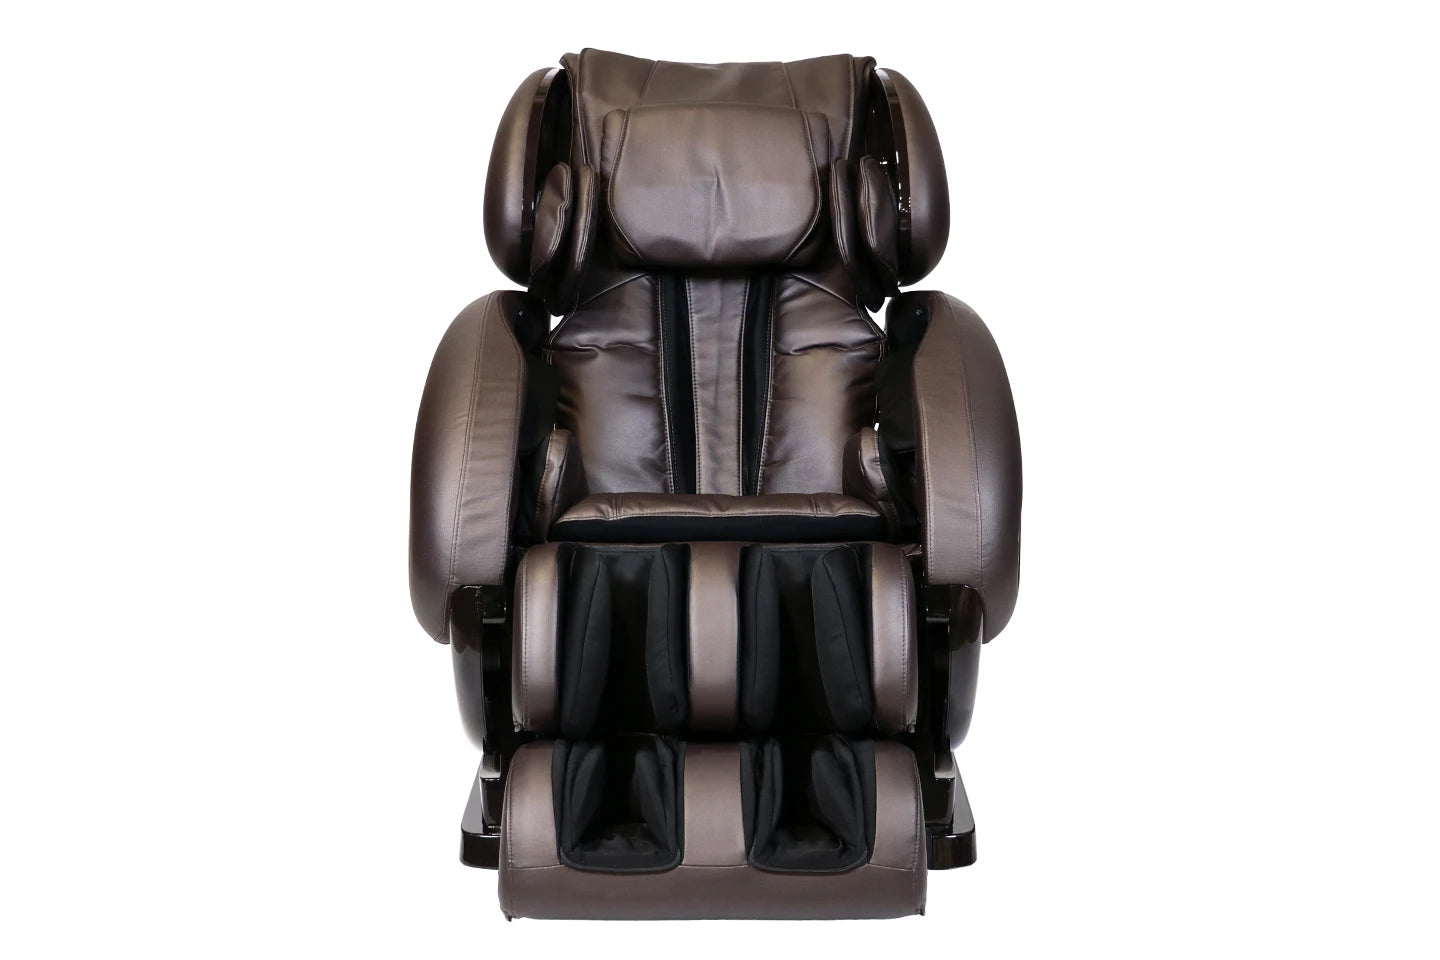 New Infinity IT-8500 Plus Zero-Gravity Massage Chair